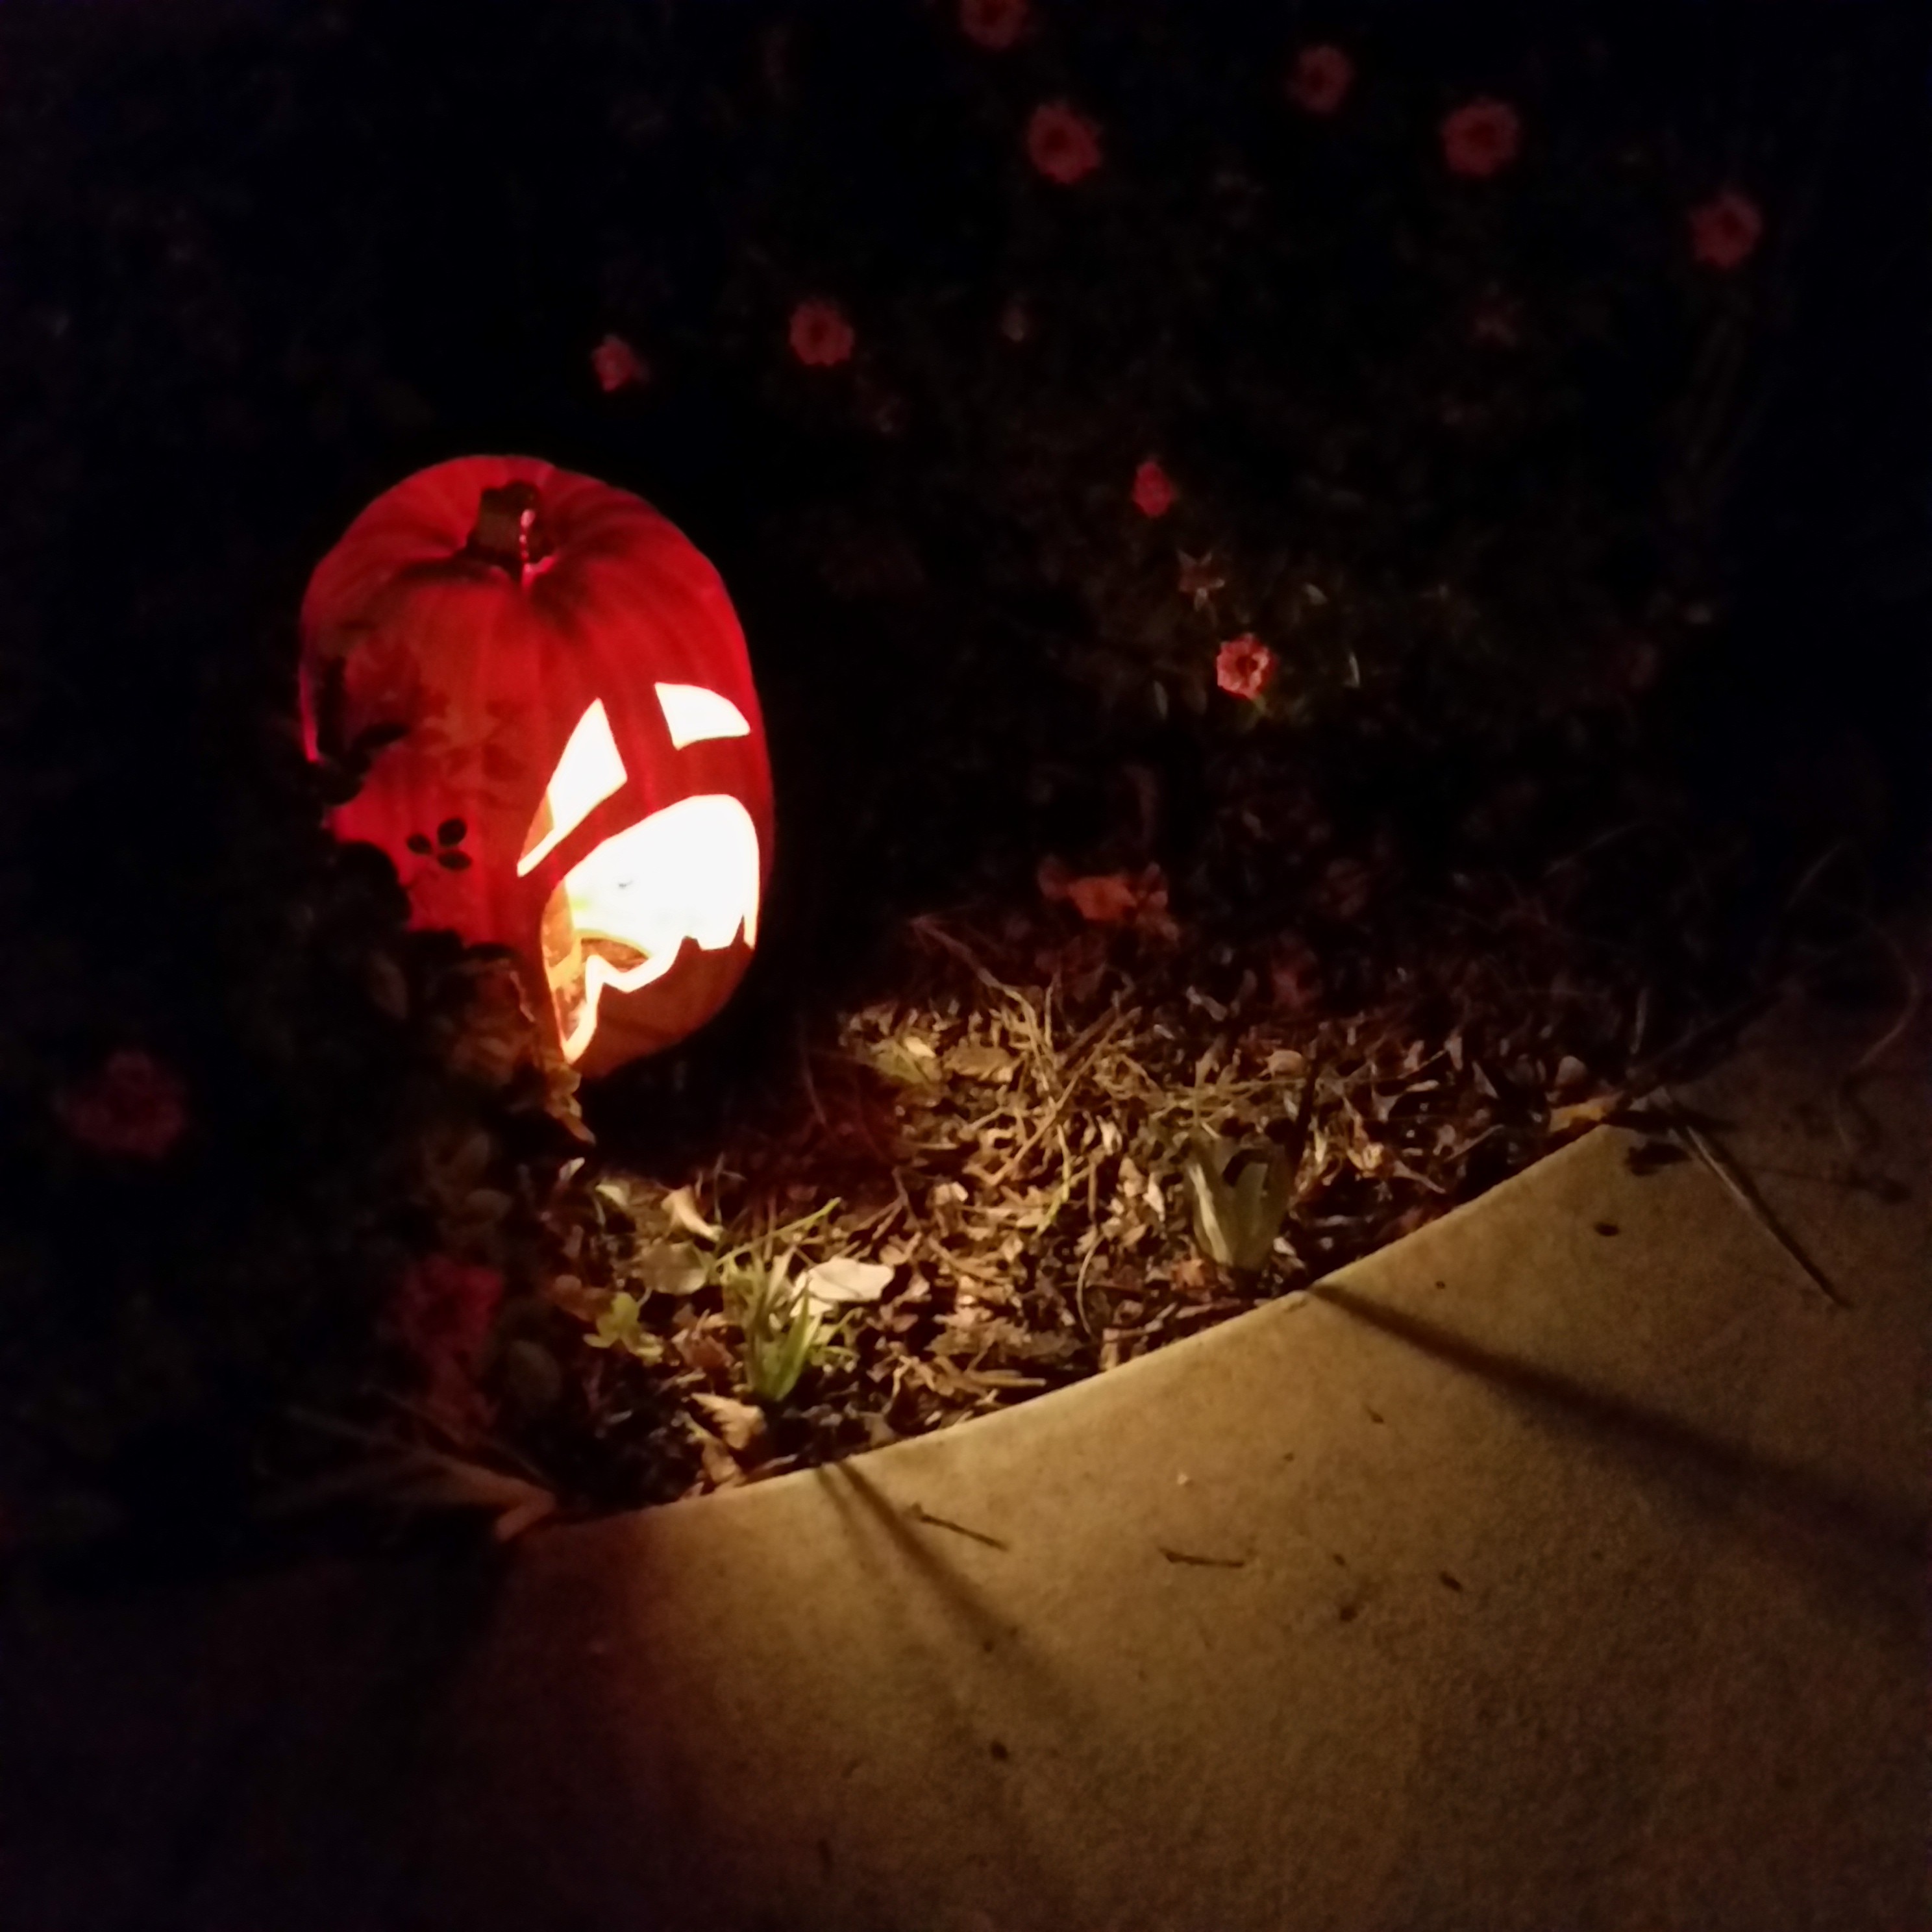 Plastic carved pumpkin was placed over Malibu light.